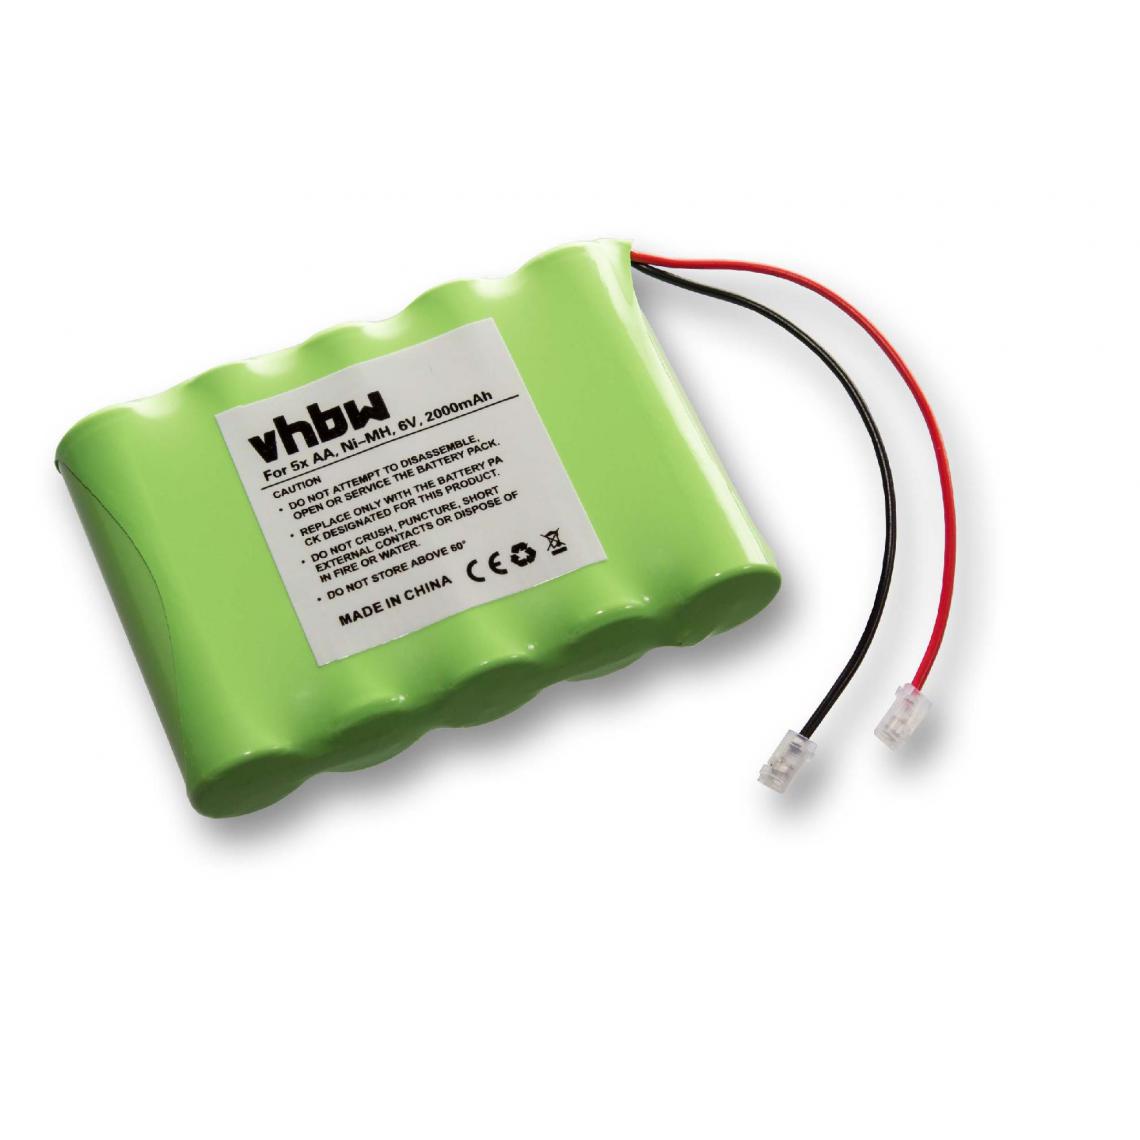 Vhbw - vhbw Batterie NiMH Universal Pack batterie 2000mAh 6V 5x AA - Autre appareil de mesure